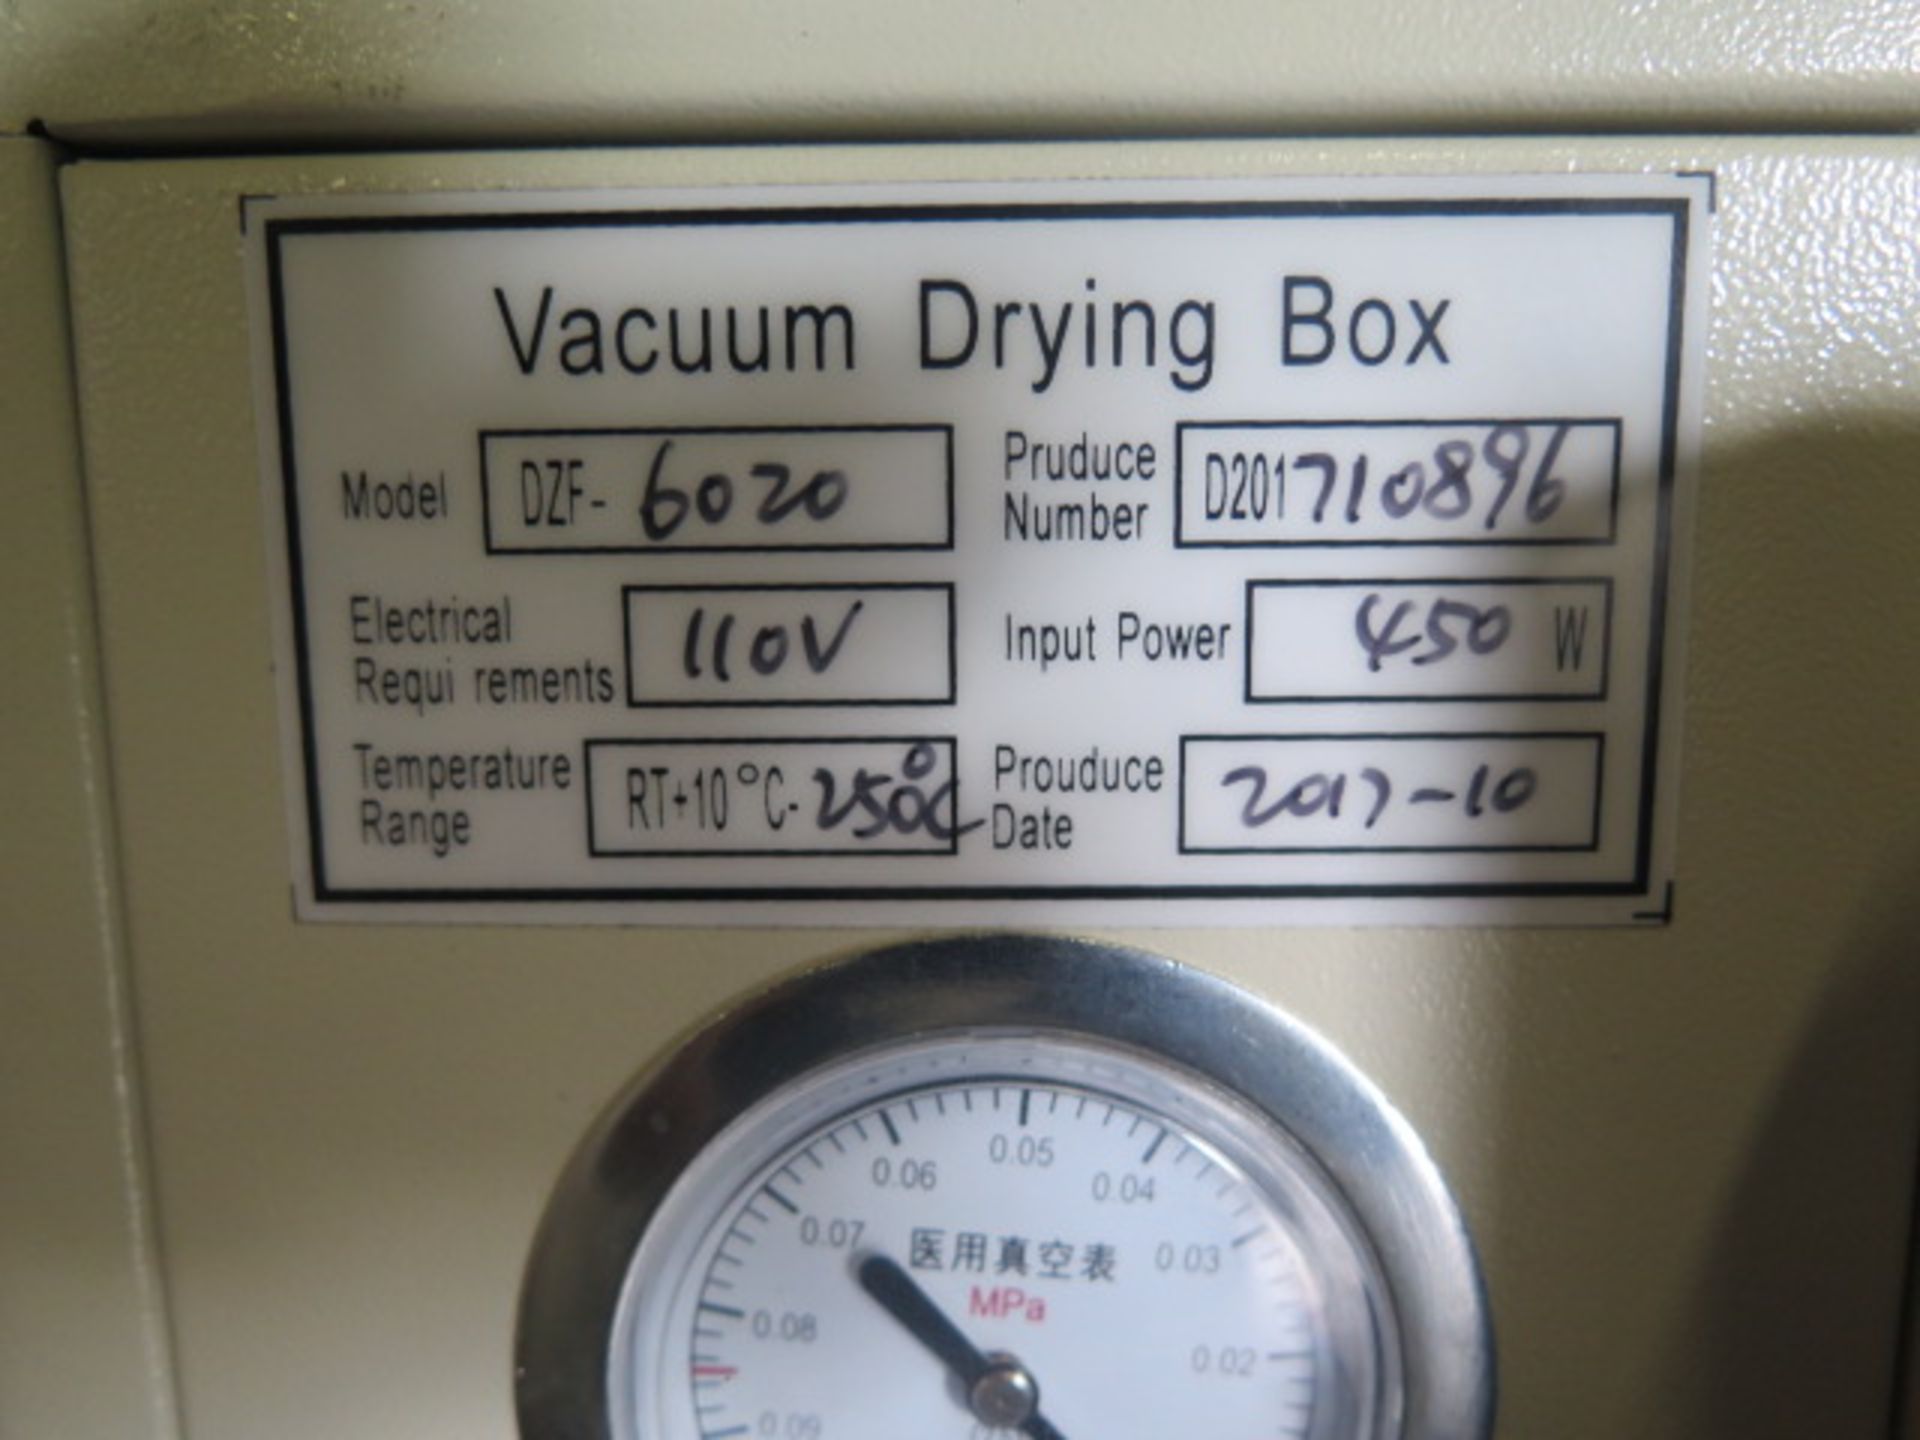 2017 Import mdl. DZF-6020 450 Watt Vacuum Drying Oven w/ 10-250 Deg C, 110 Volt - Image 5 of 5